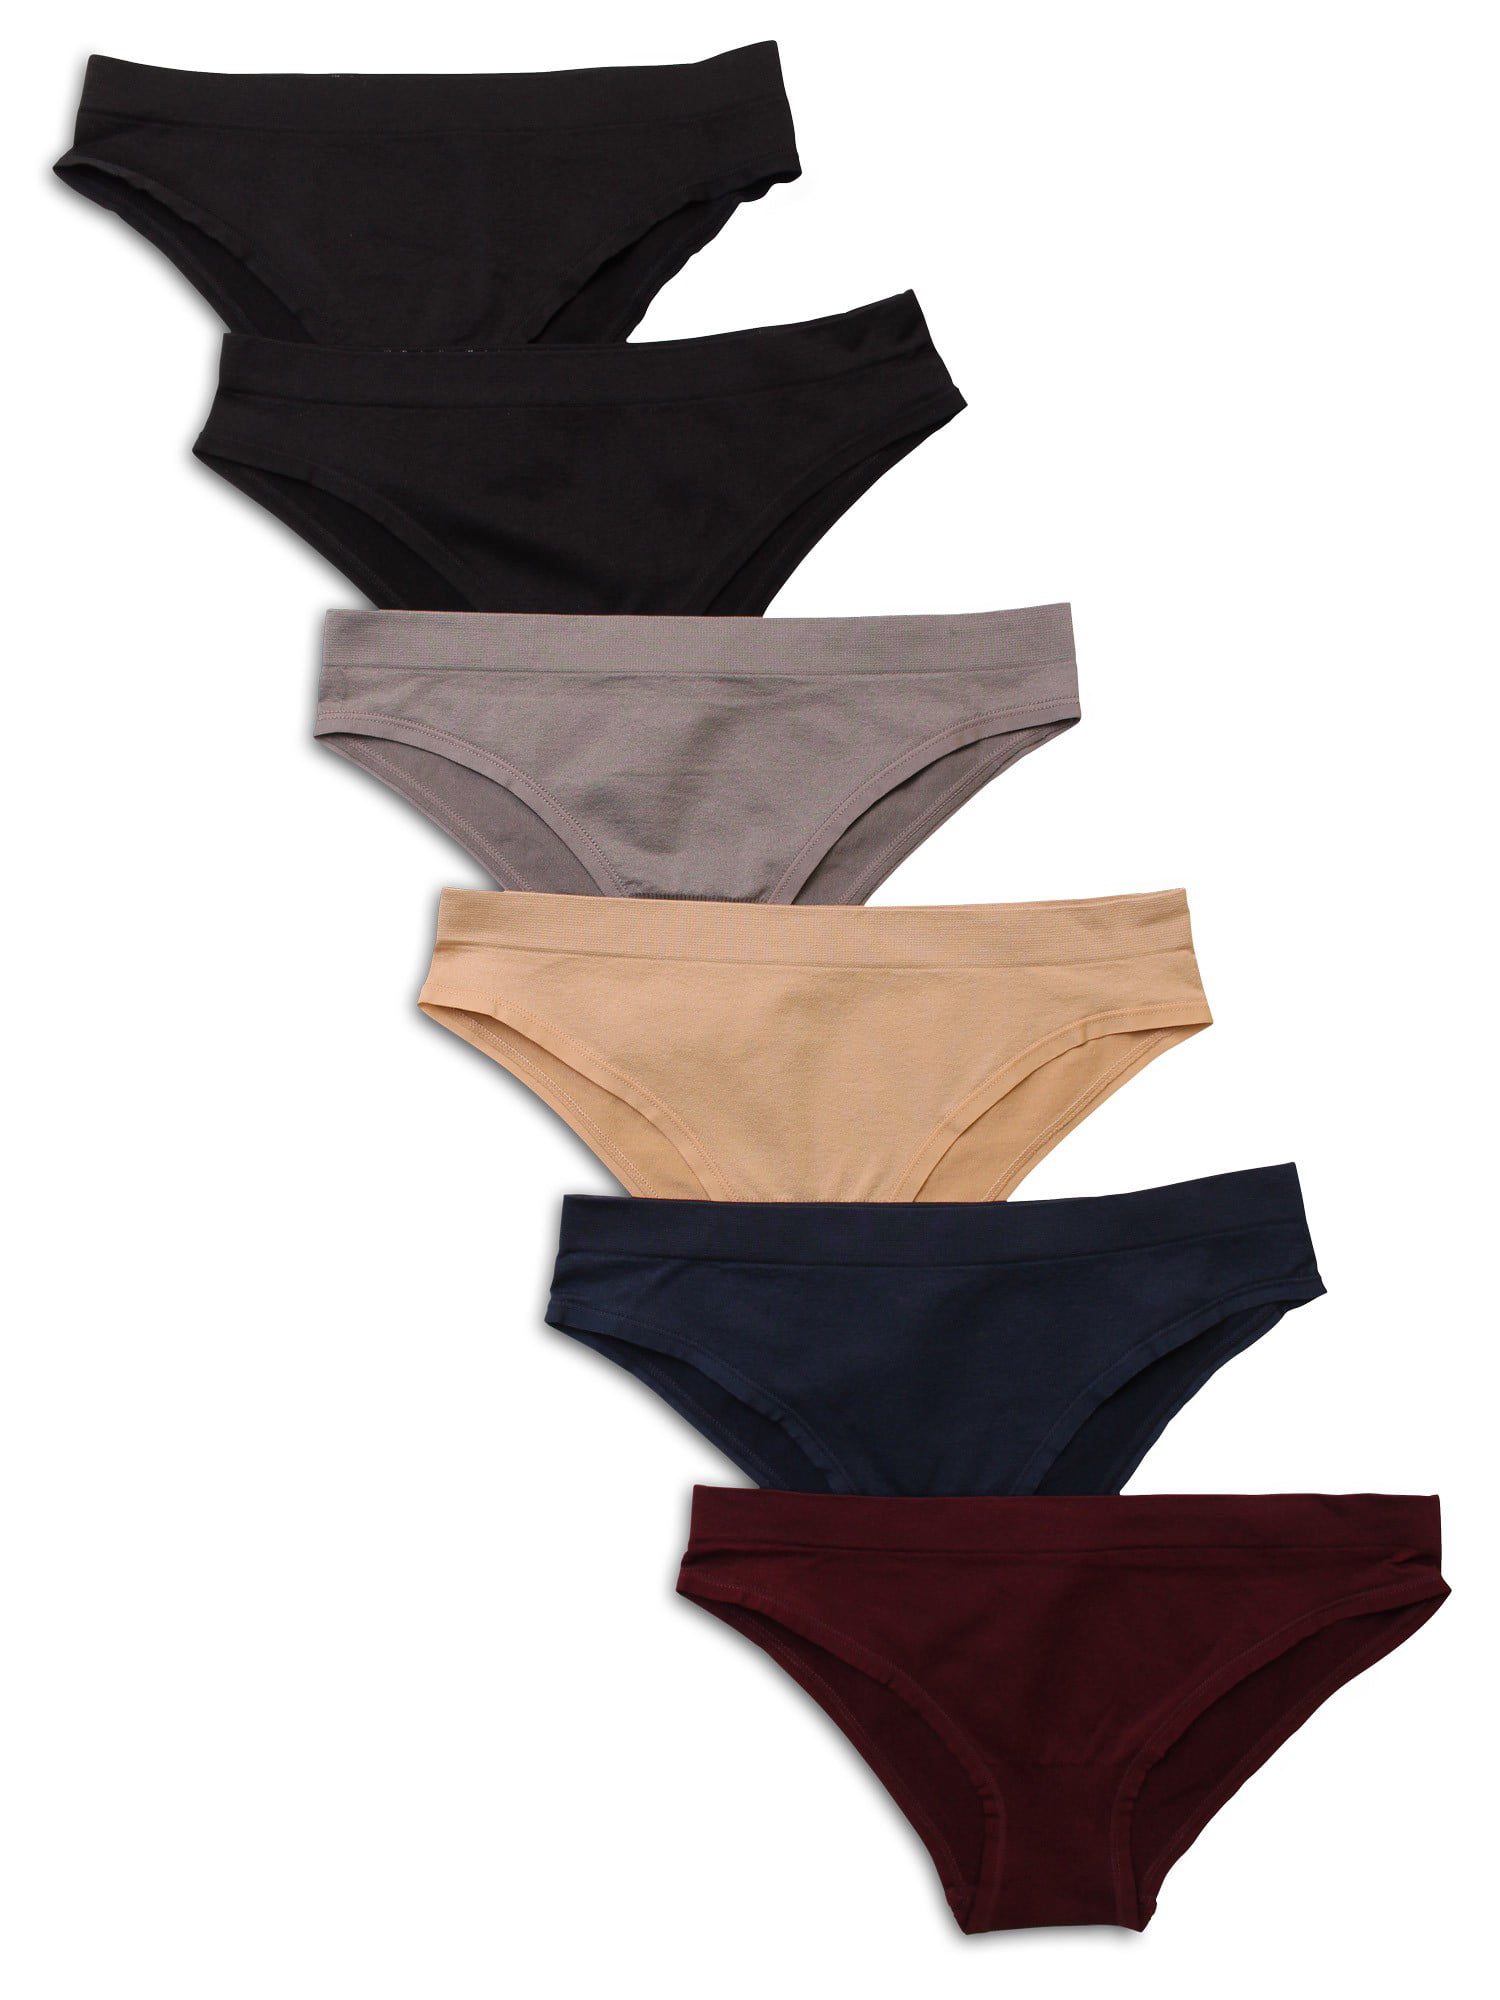 Buankoxy 6 Pack Women's Low-Rise String Bikini Panty Stretch  Briefs(Black,Size6)